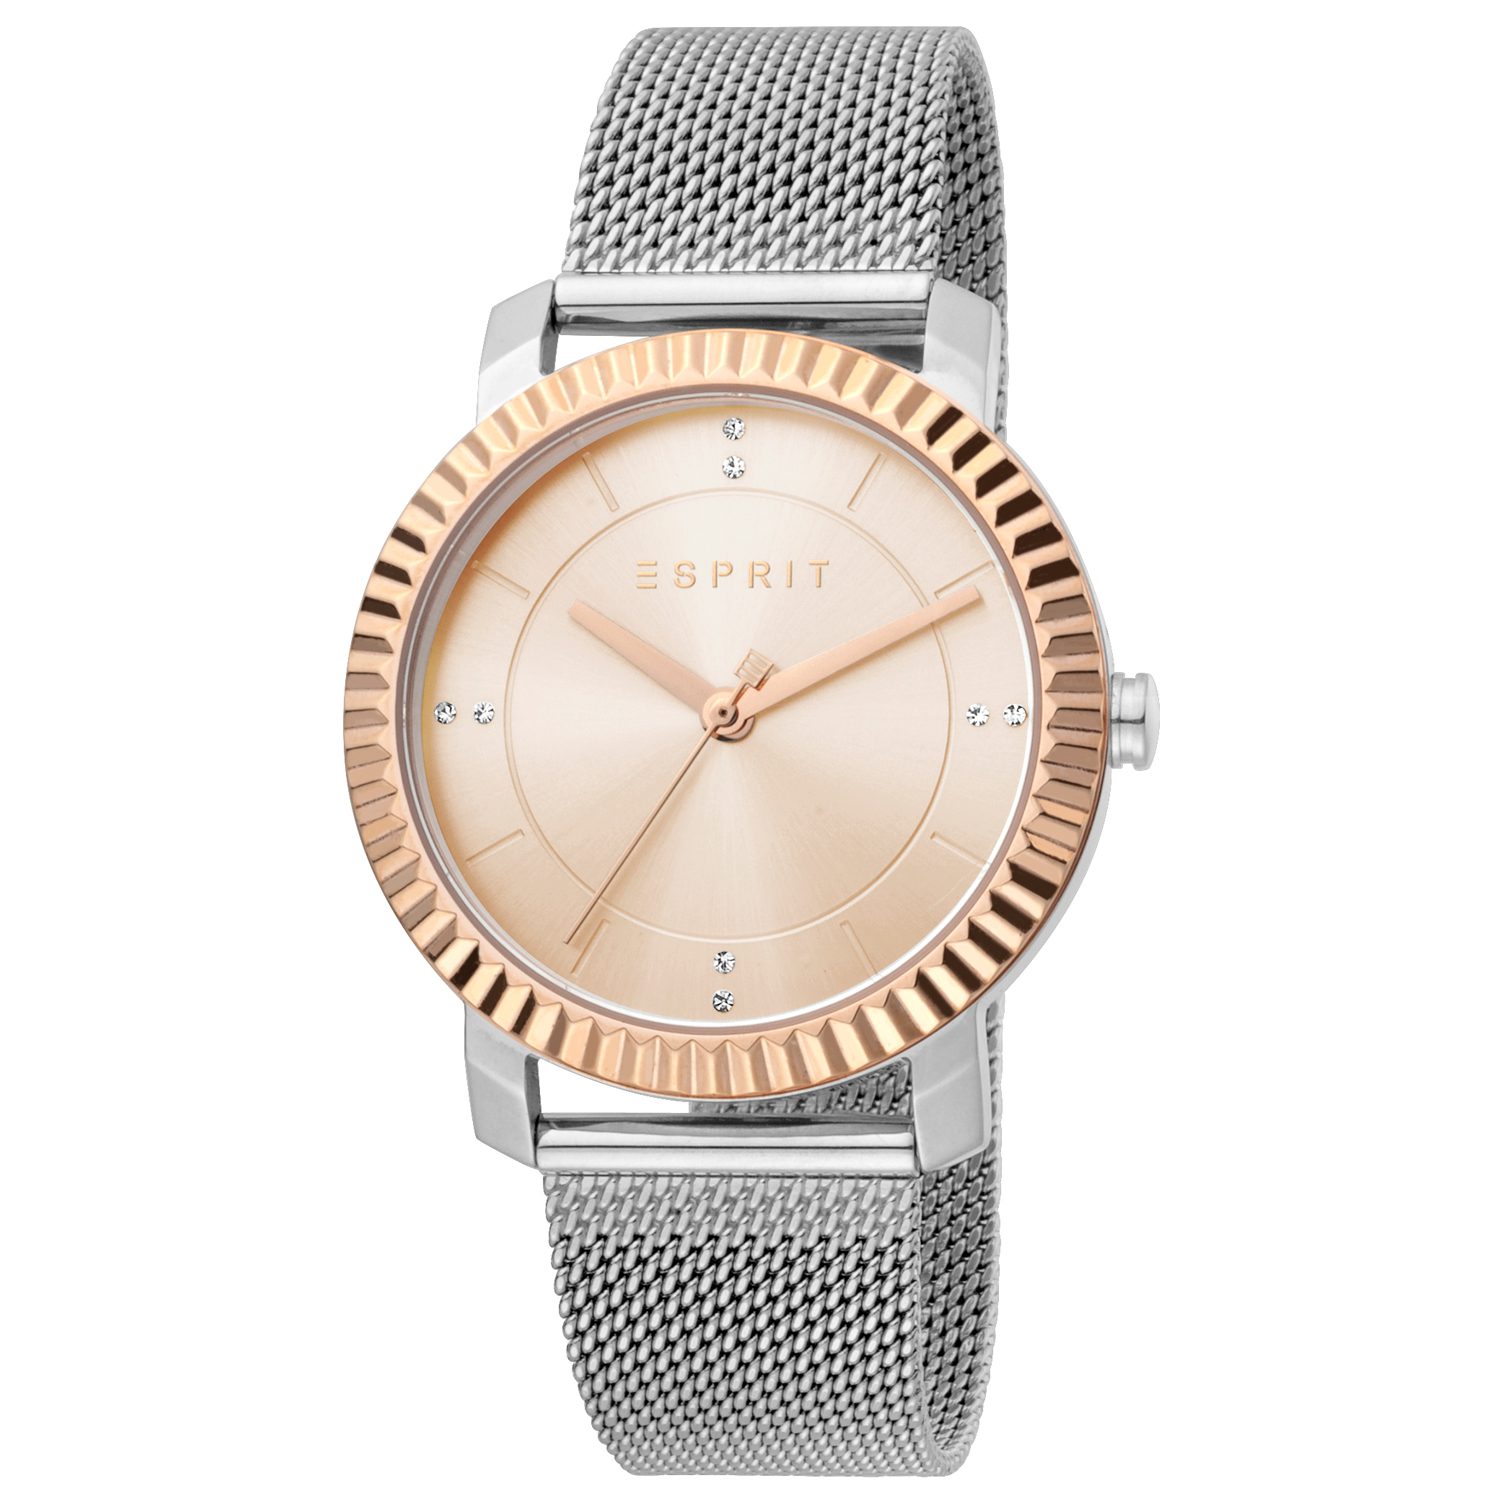 Esprit dames horloge ES1L184M0055 - polshorloge - 5ATM - gratis armband - Zilver en Roze kleur